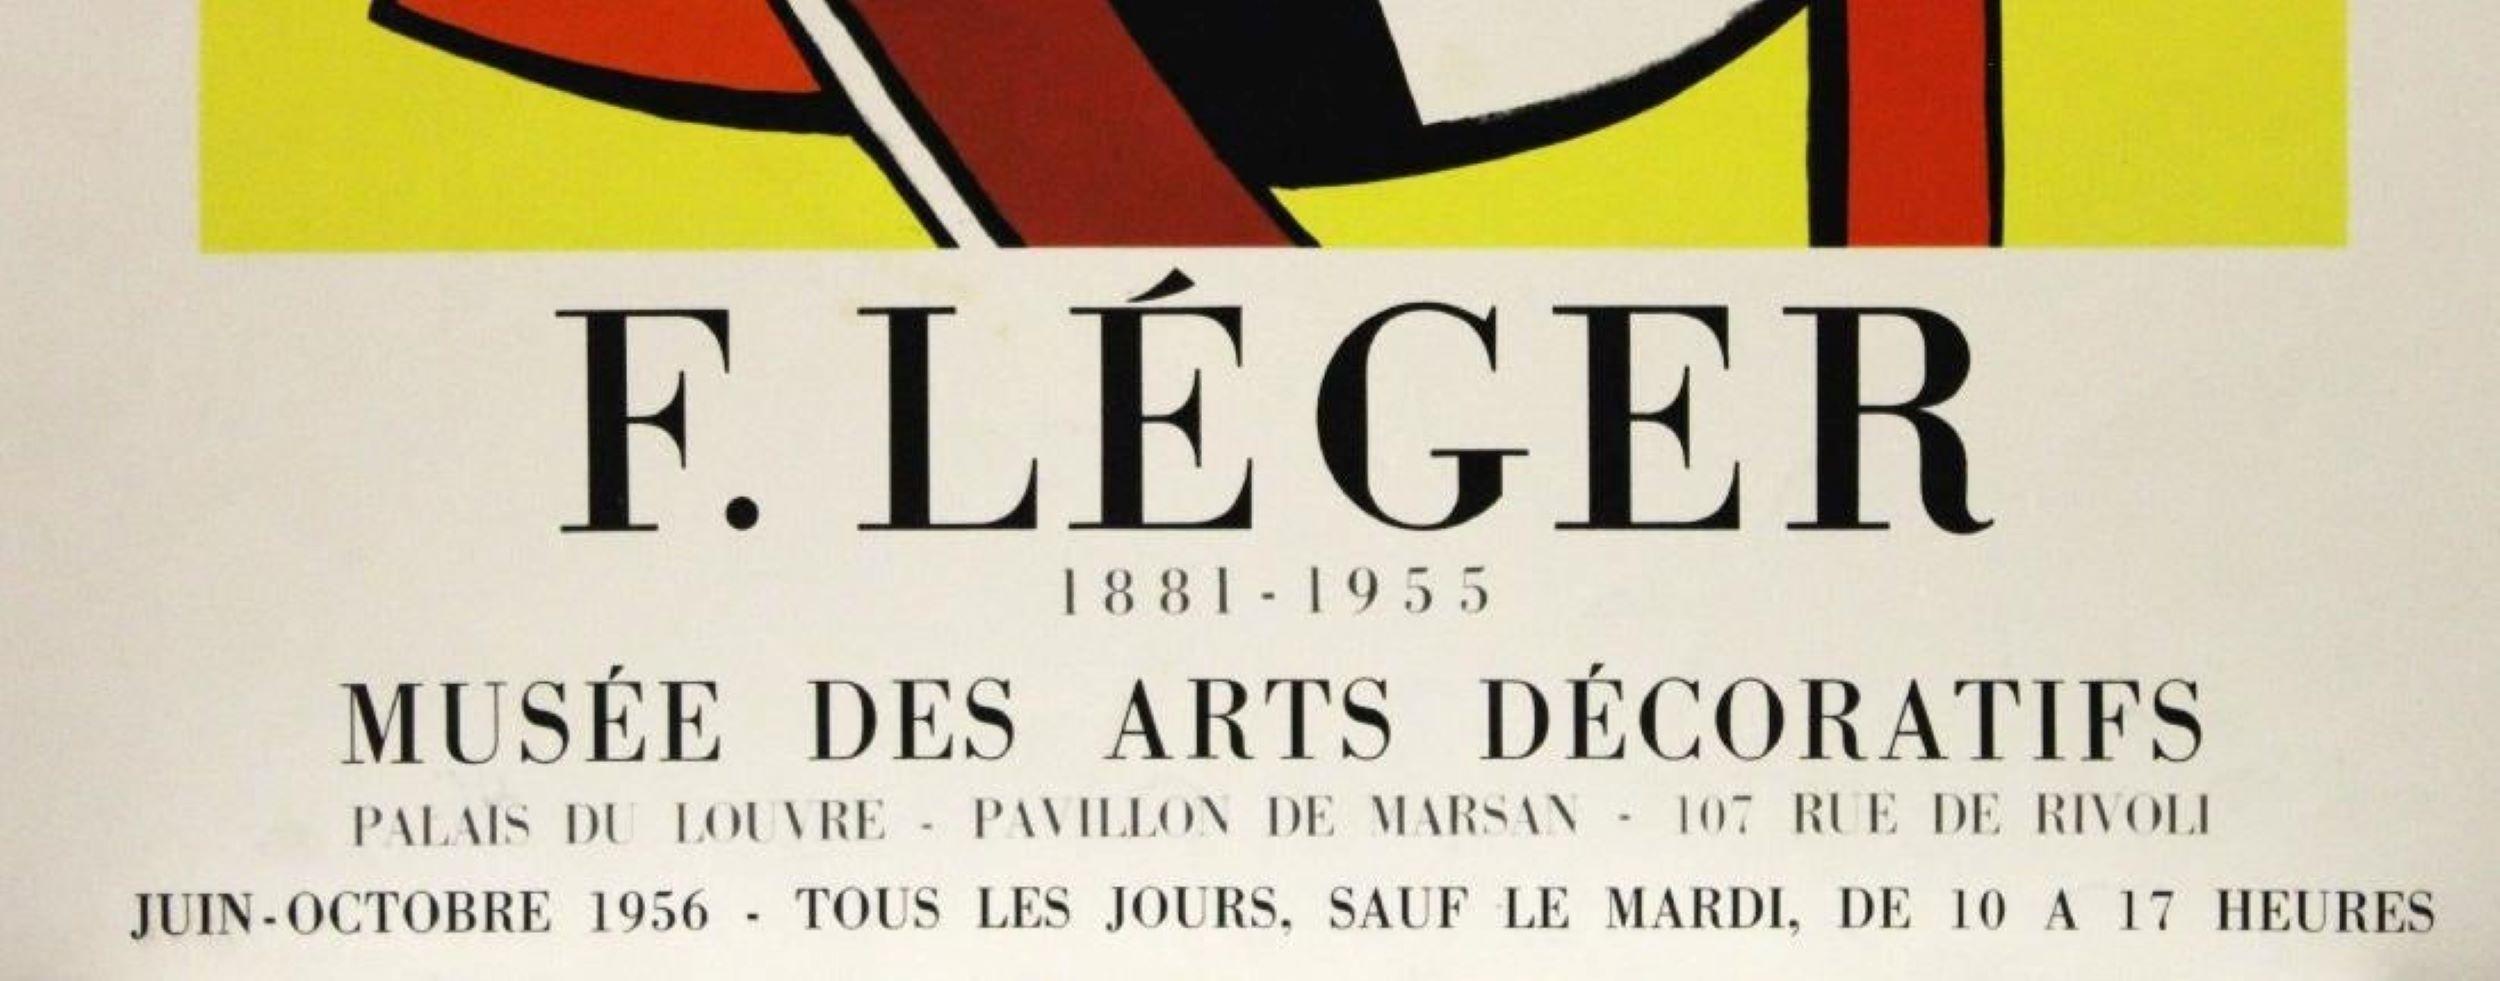 1881-1955, Musée des Arts Décoraties, Event Poster - Print by (after) Fernand Léger